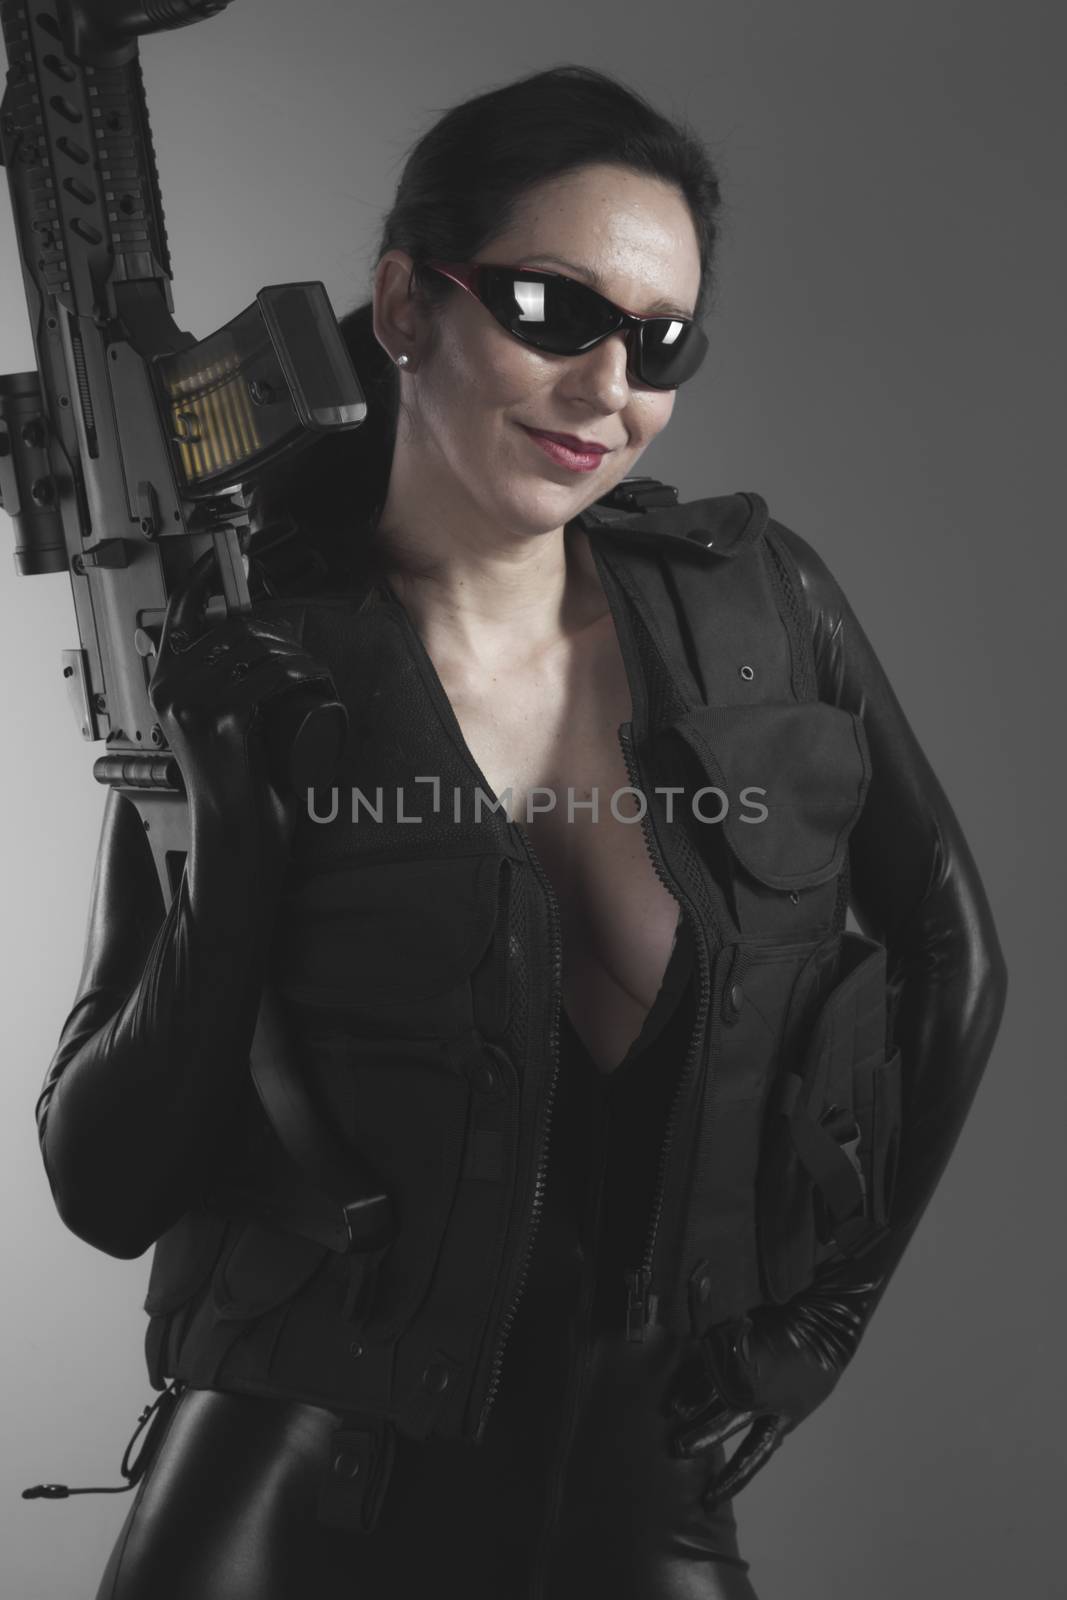 Costume, Brunette woman with enormous bulletproof vest and gun by FernandoCortes